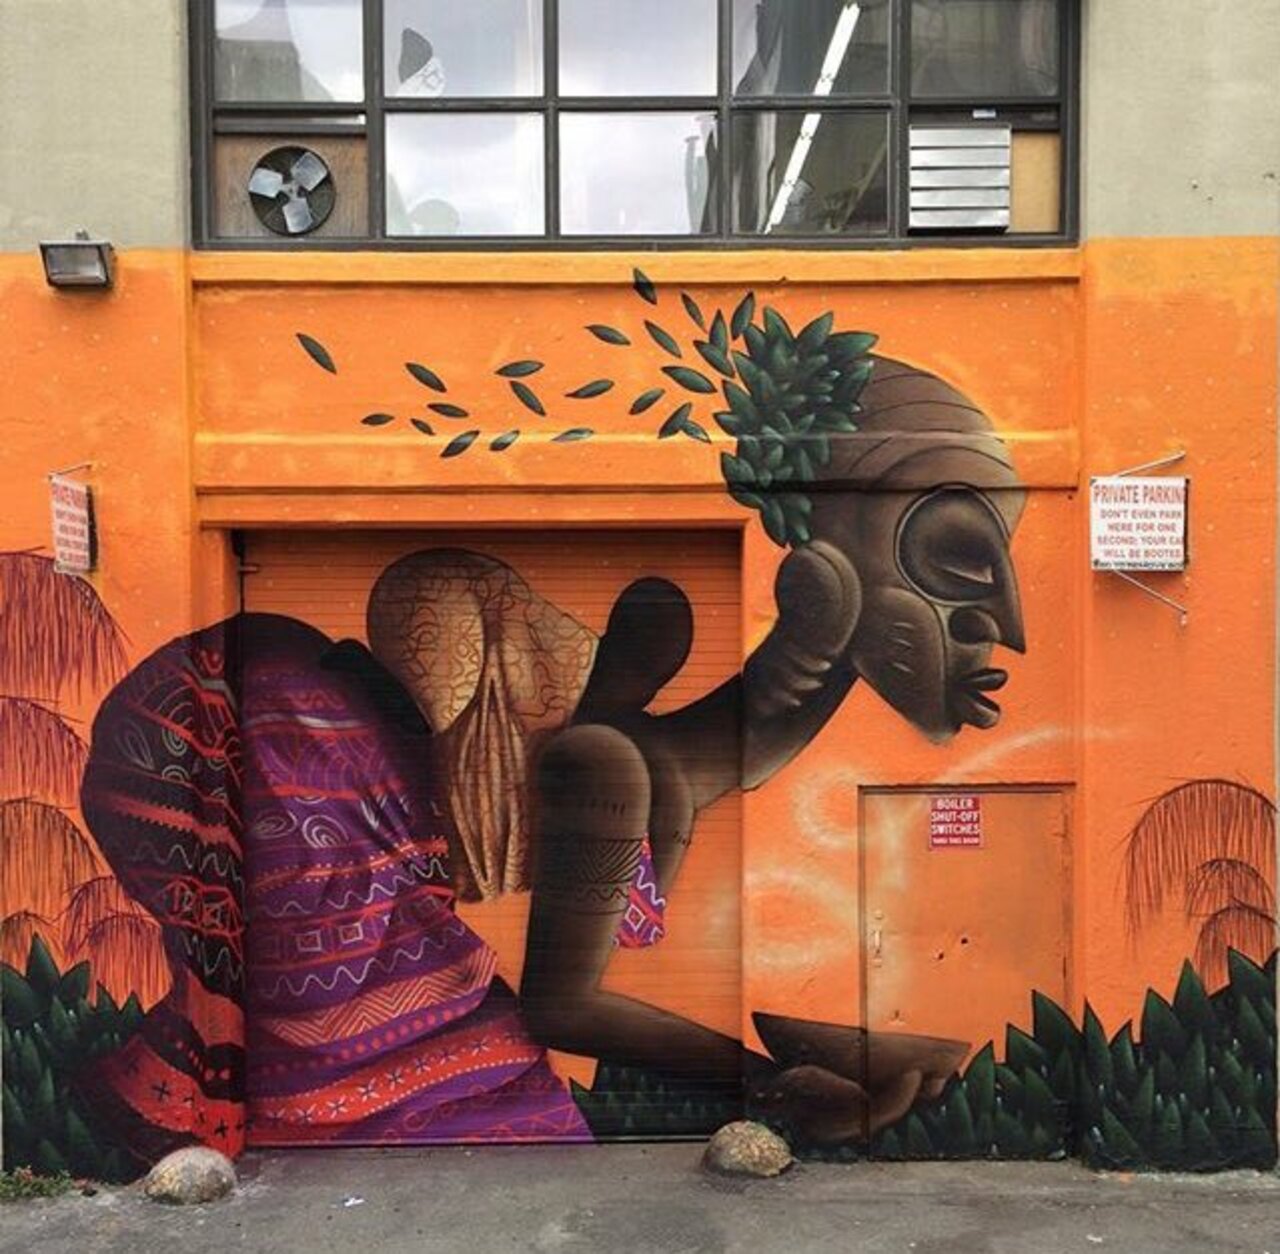 New Street Art by Alexandre Keto in NYC 

#art #graffiti #mural #streetart https://t.co/rN6NWIj40P